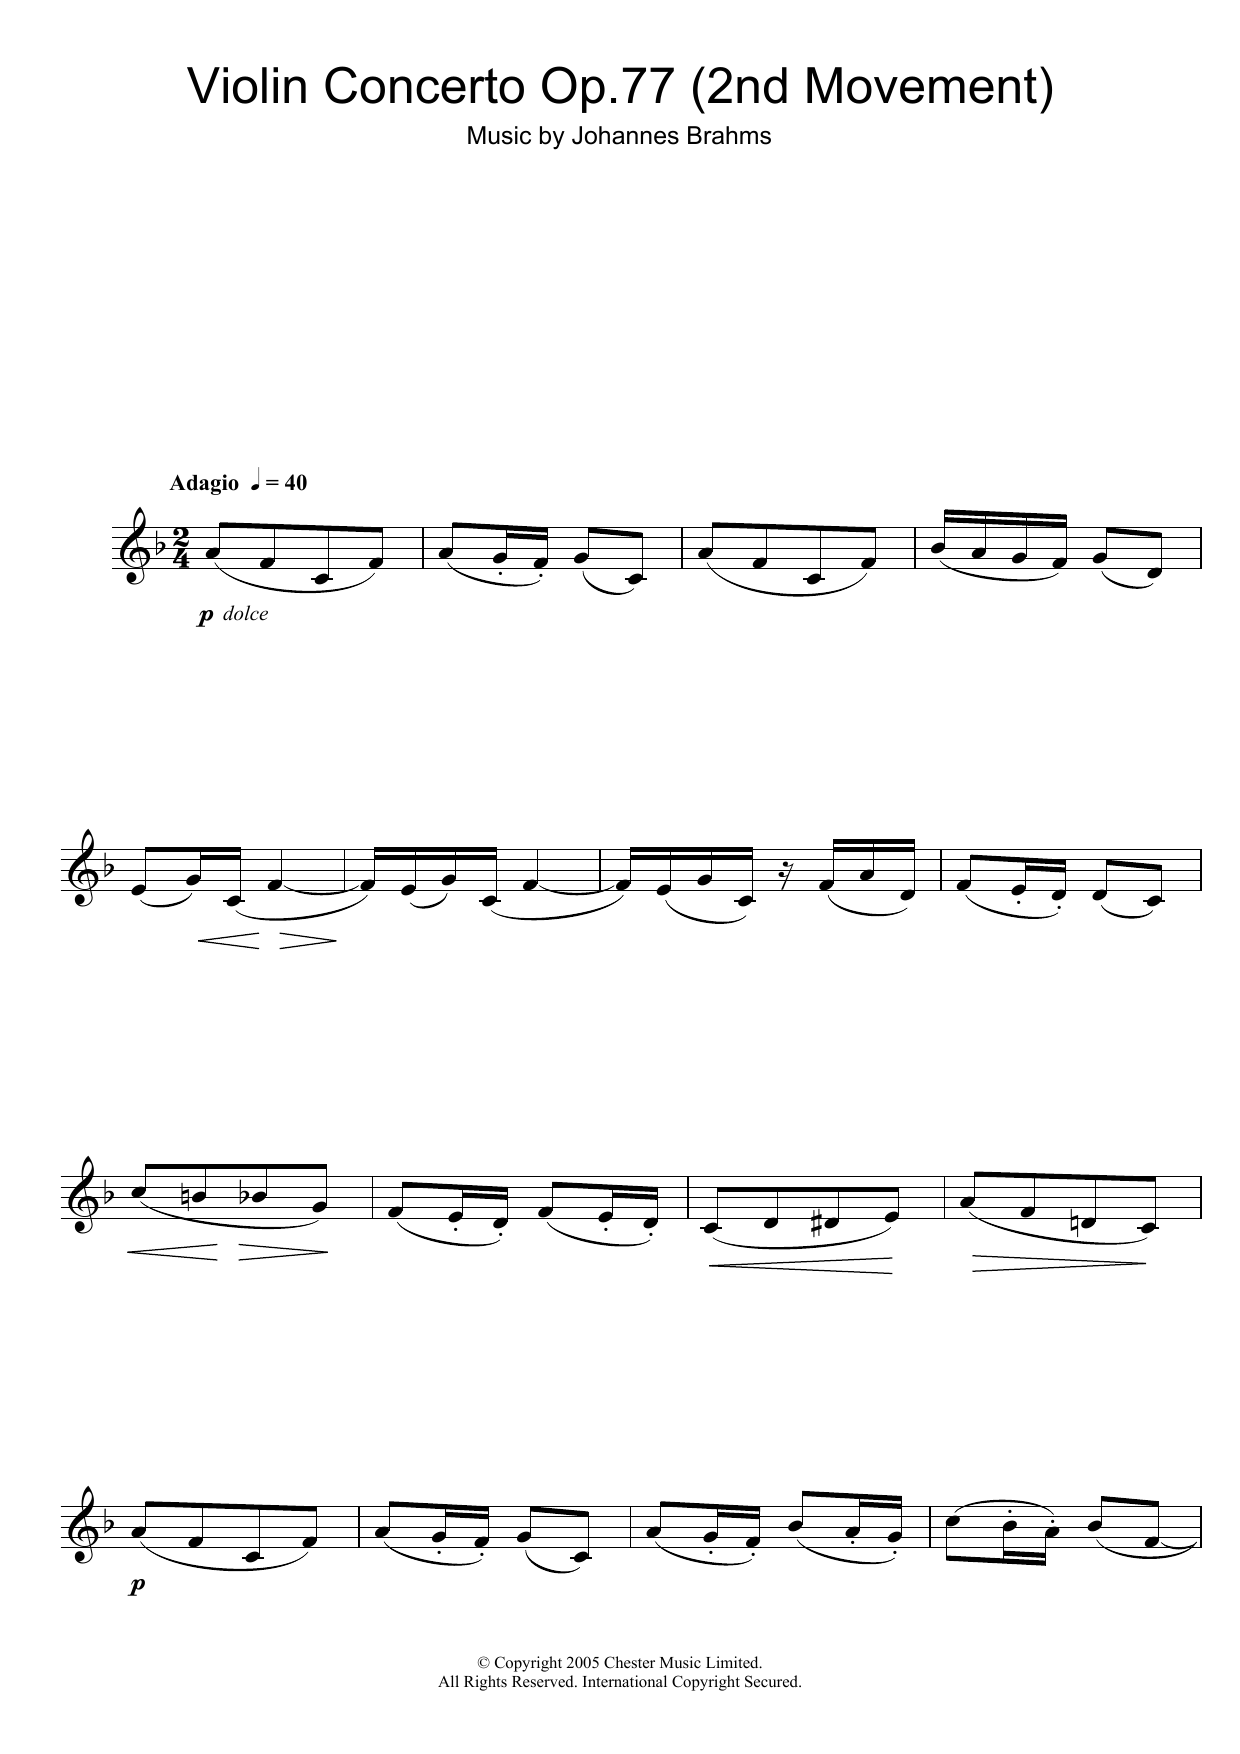 Johannes Brahms Violin Concerto (2nd Movement) Sheet Music Notes & Chords for Flute - Download or Print PDF